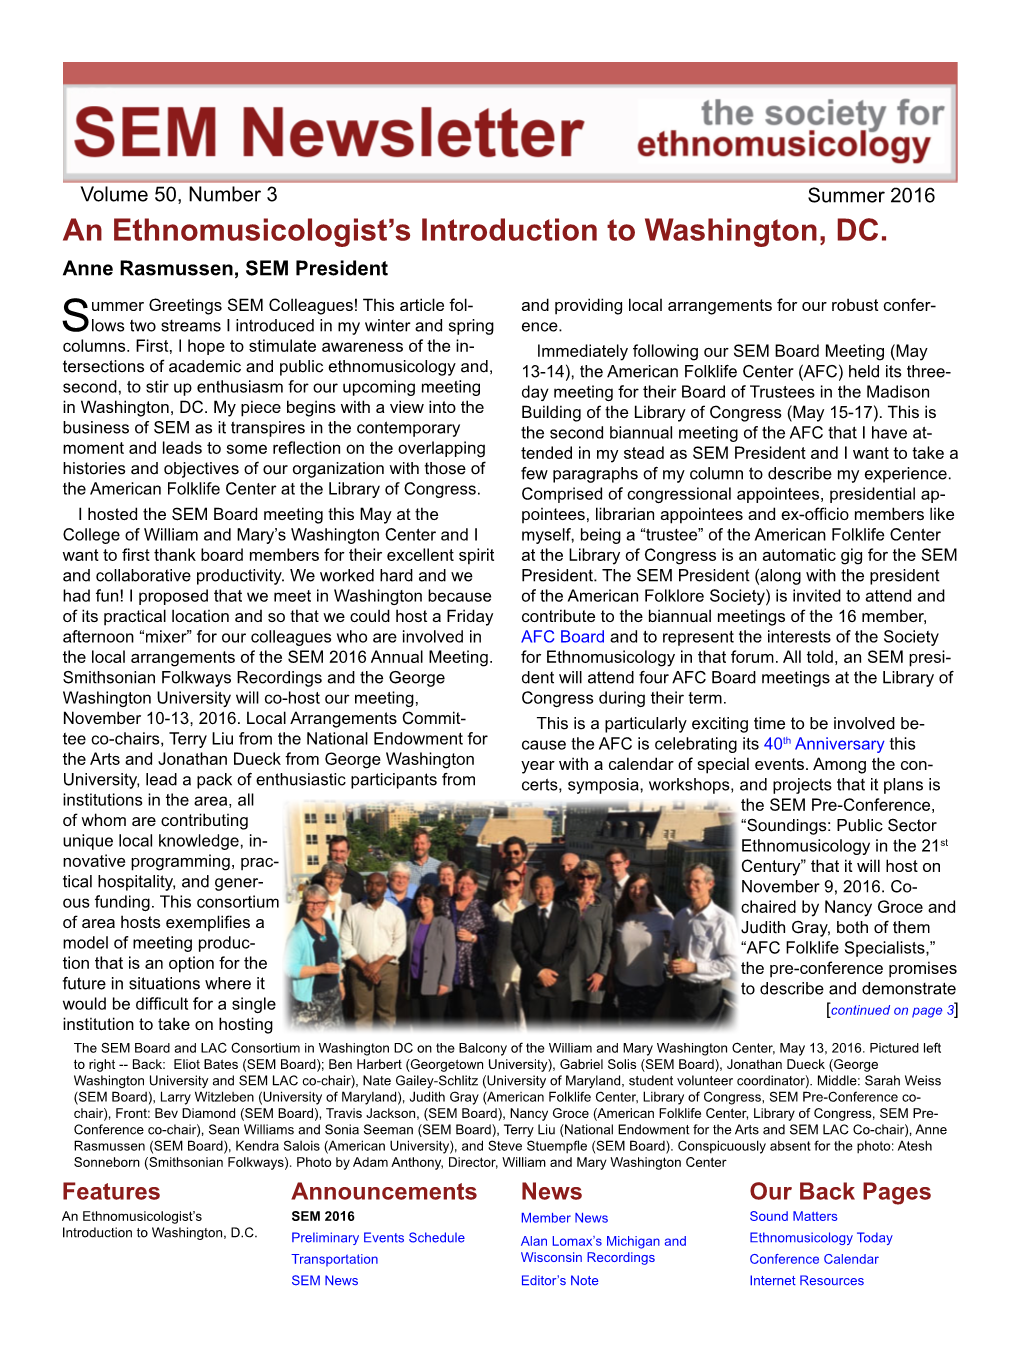 An Ethnomusicologist's Introduction to Washington